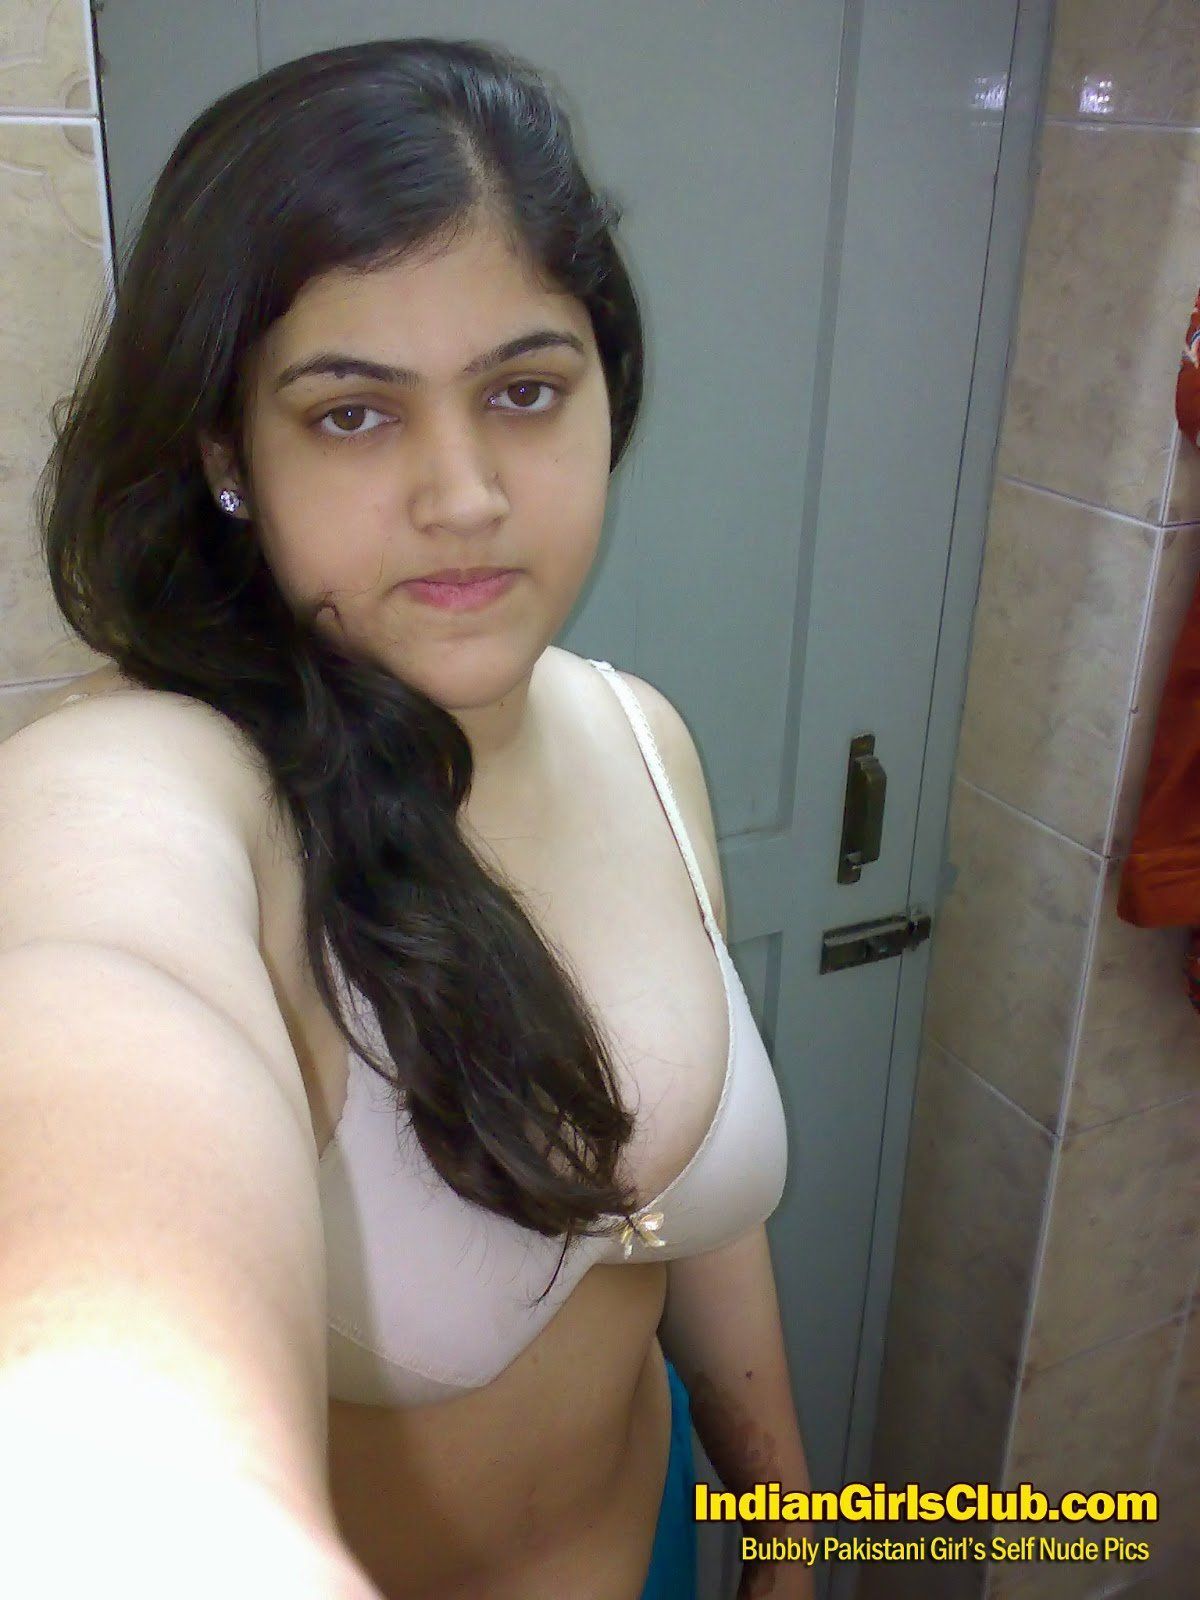 Pakistani Girl Naked Photos